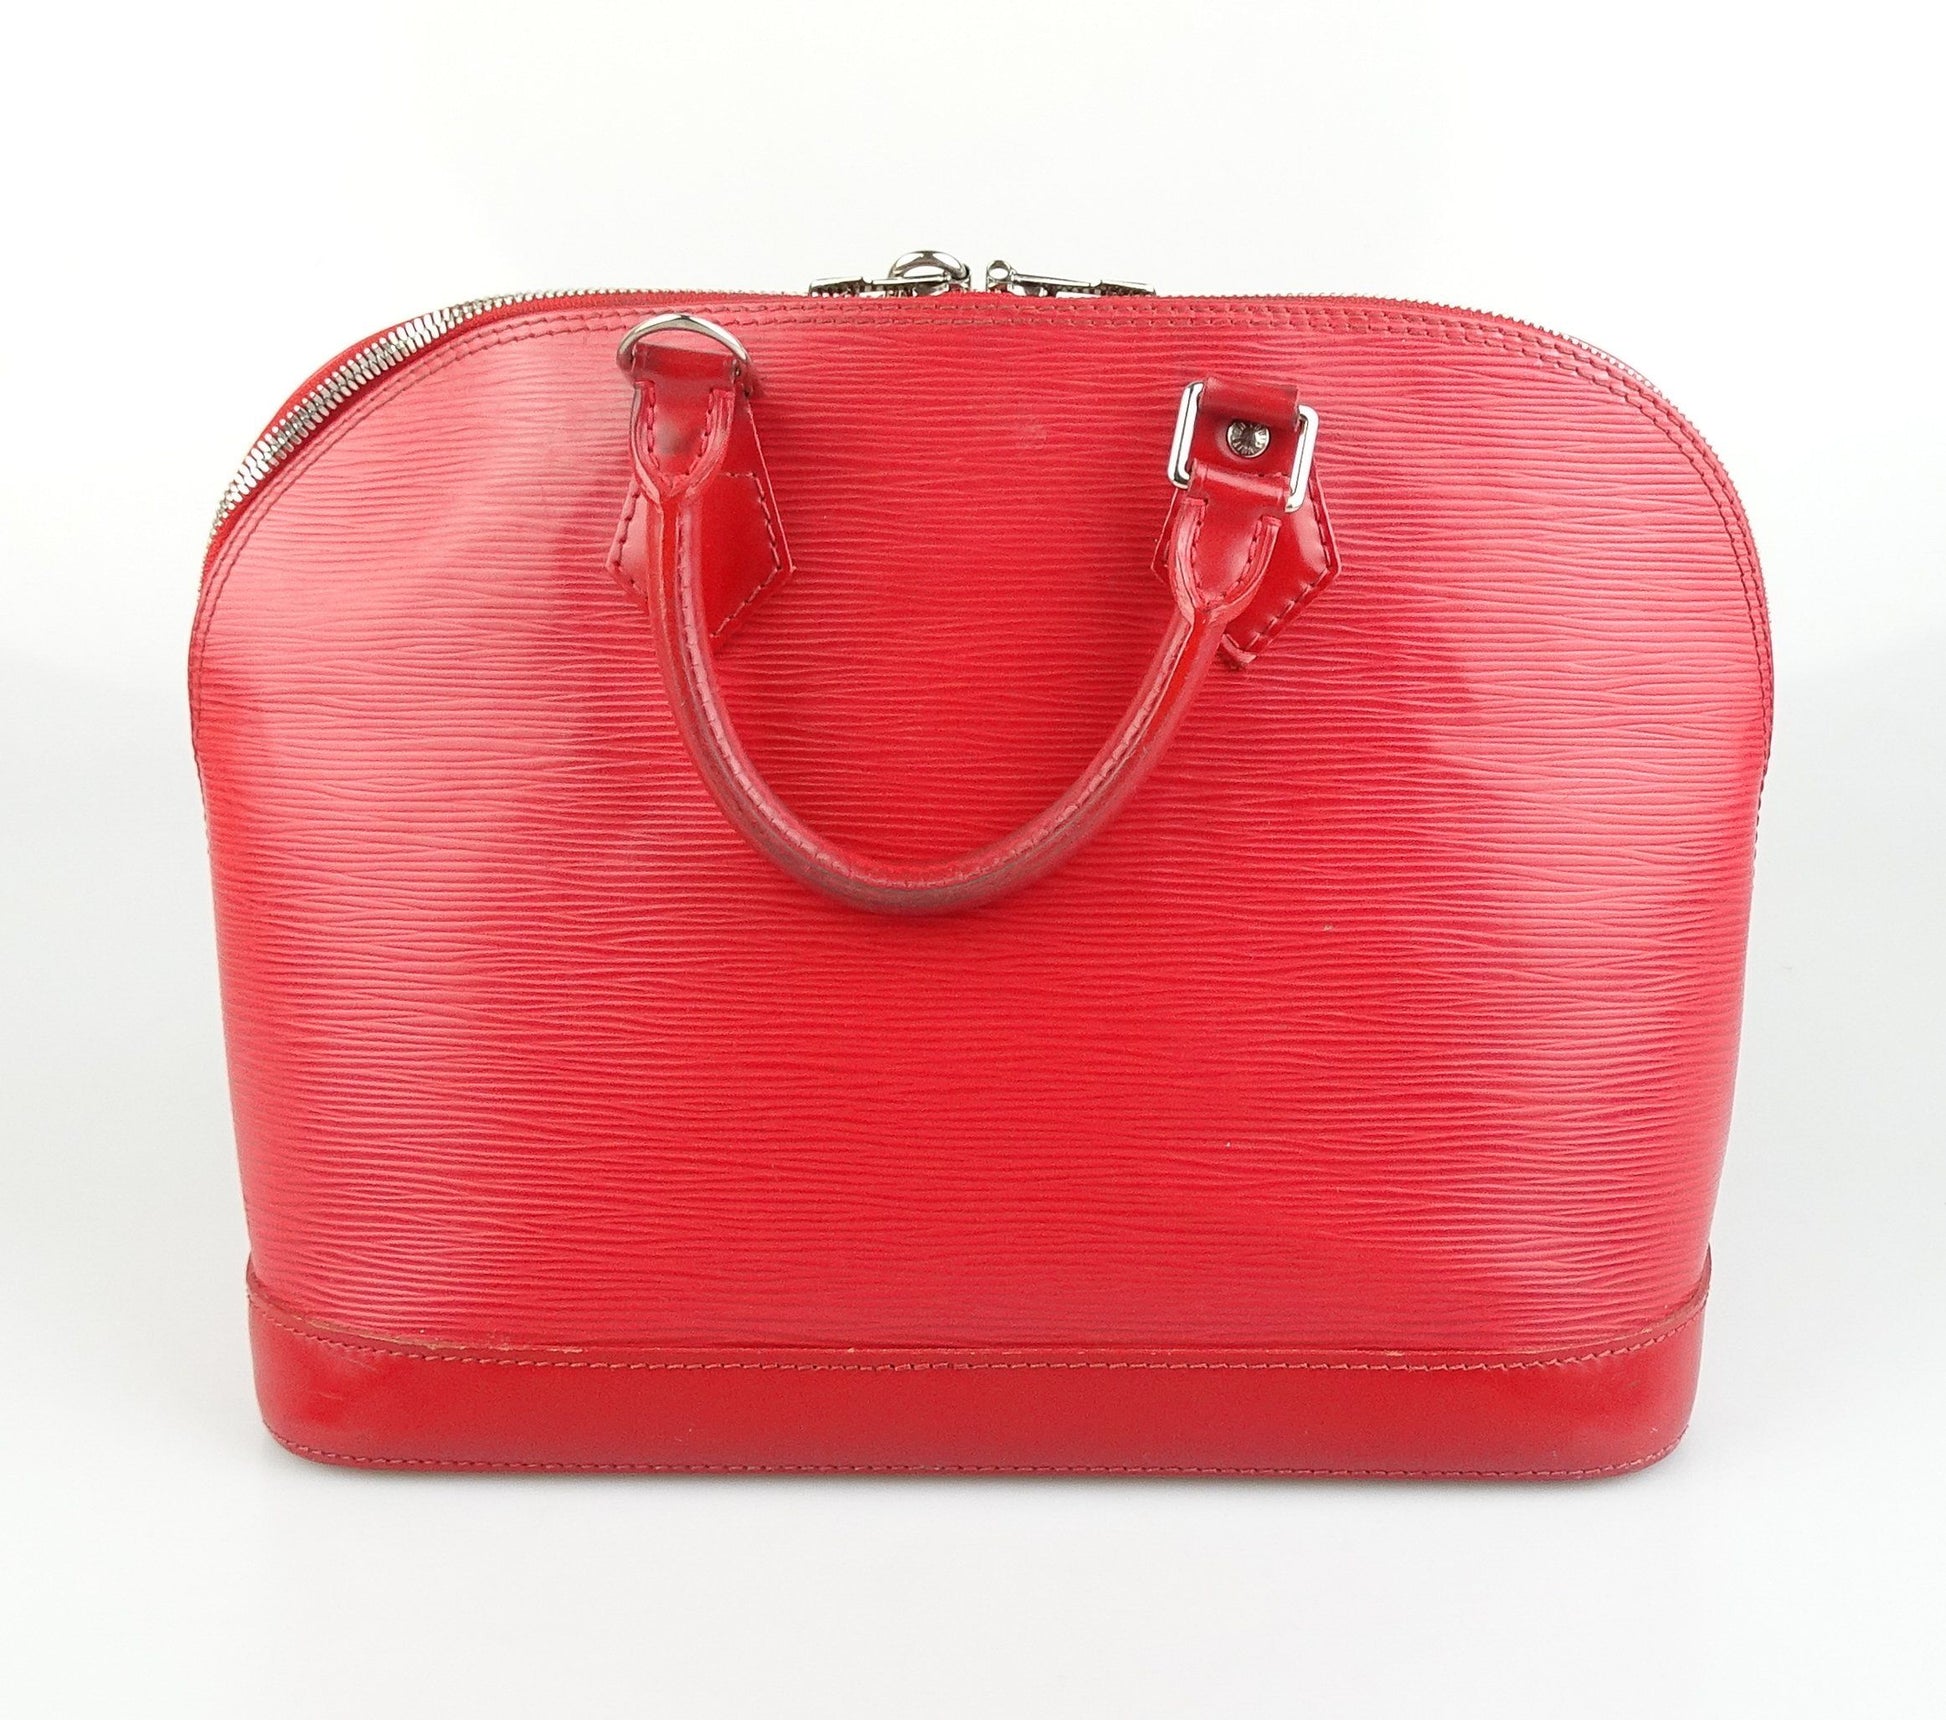 Authentic Louis Vuitton Epi Leather Alma PM in Orange Satchel Handbag